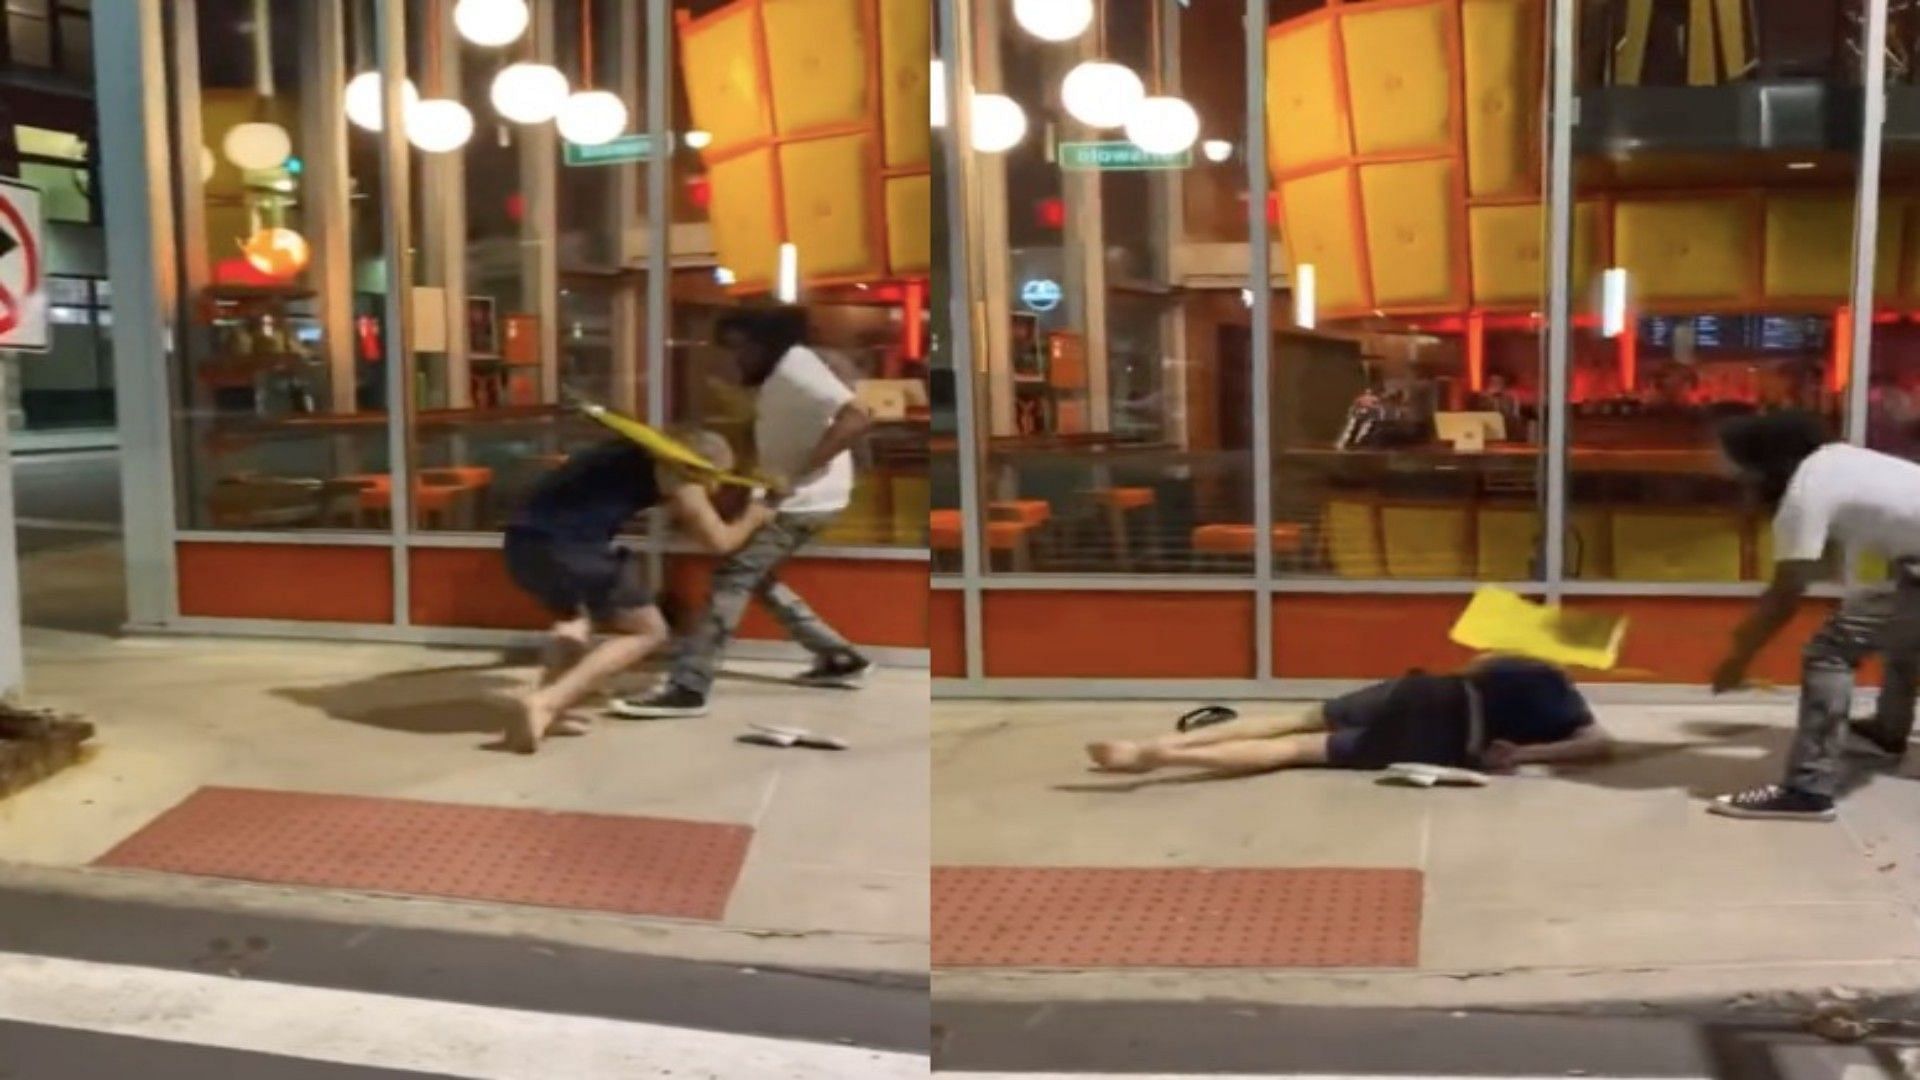 Detroit chair fight video goes viral online (Image via screengrab Firtsthemnews/Twitter)